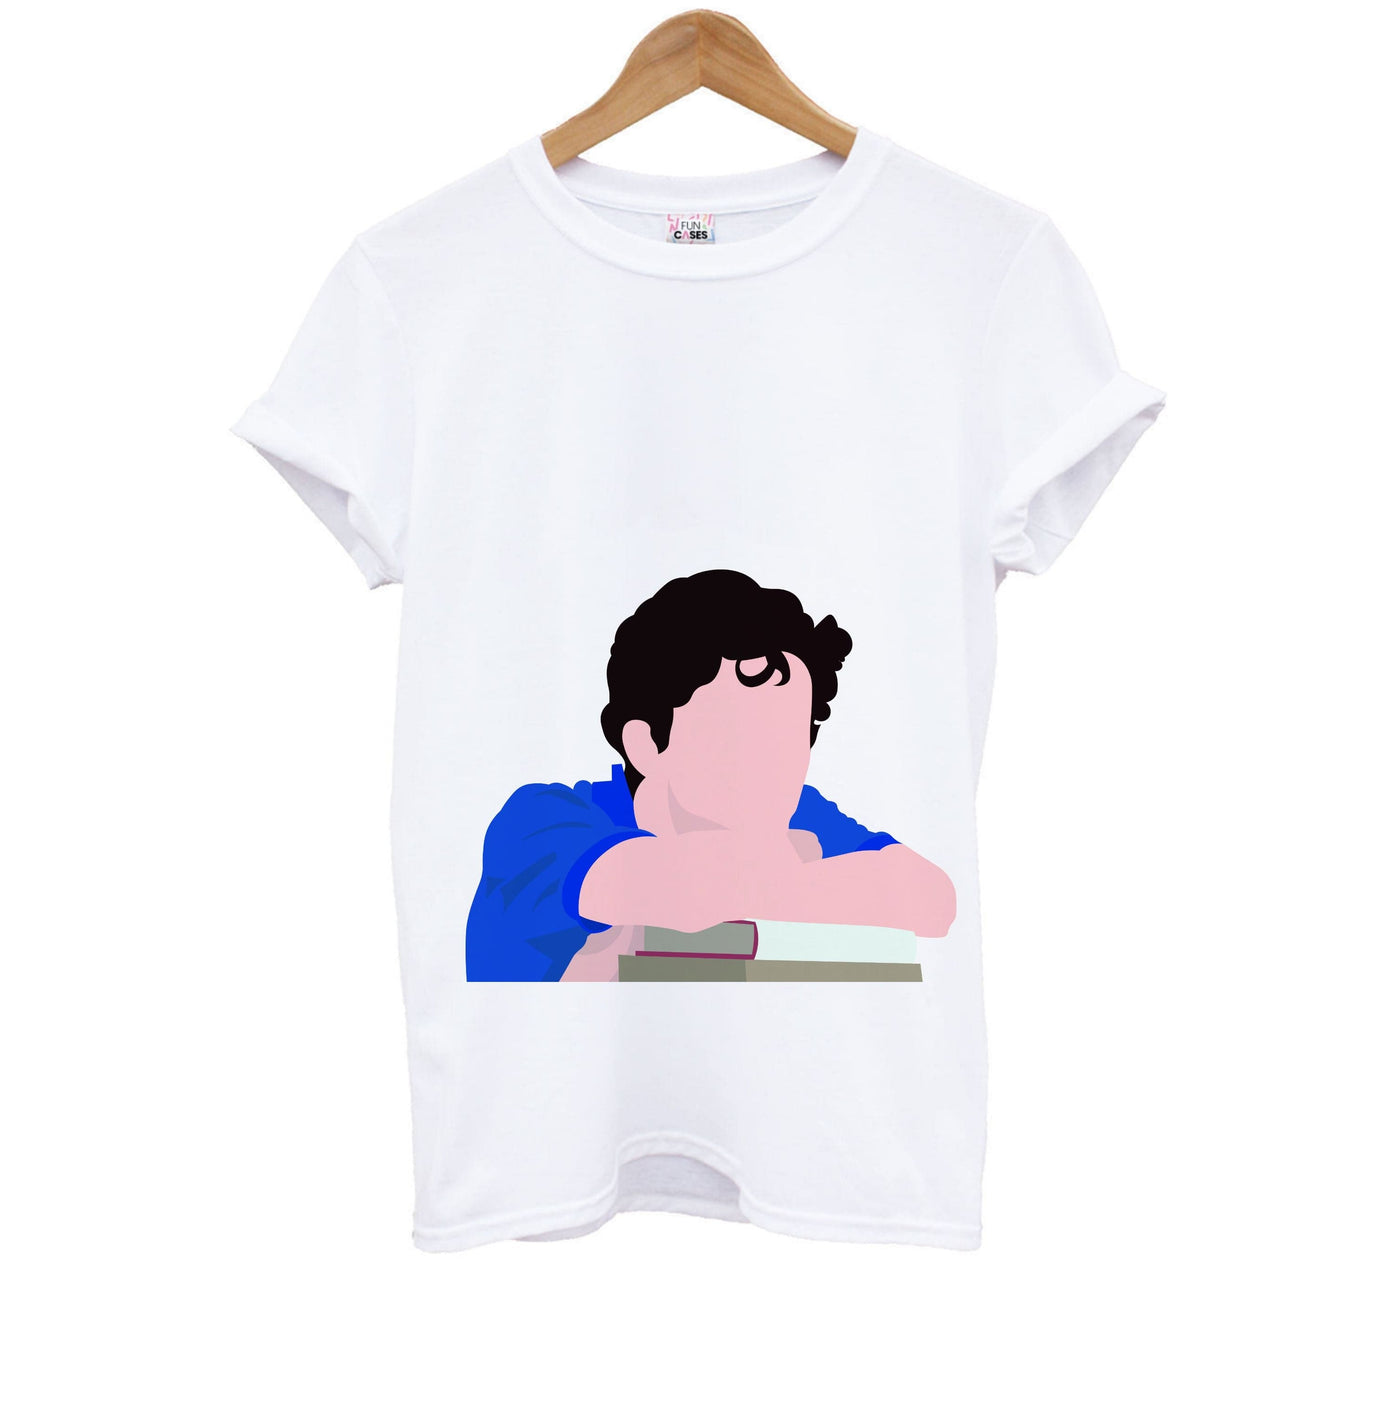 Call Me By Your Name - Timothée Chalamet Kids T-Shirt